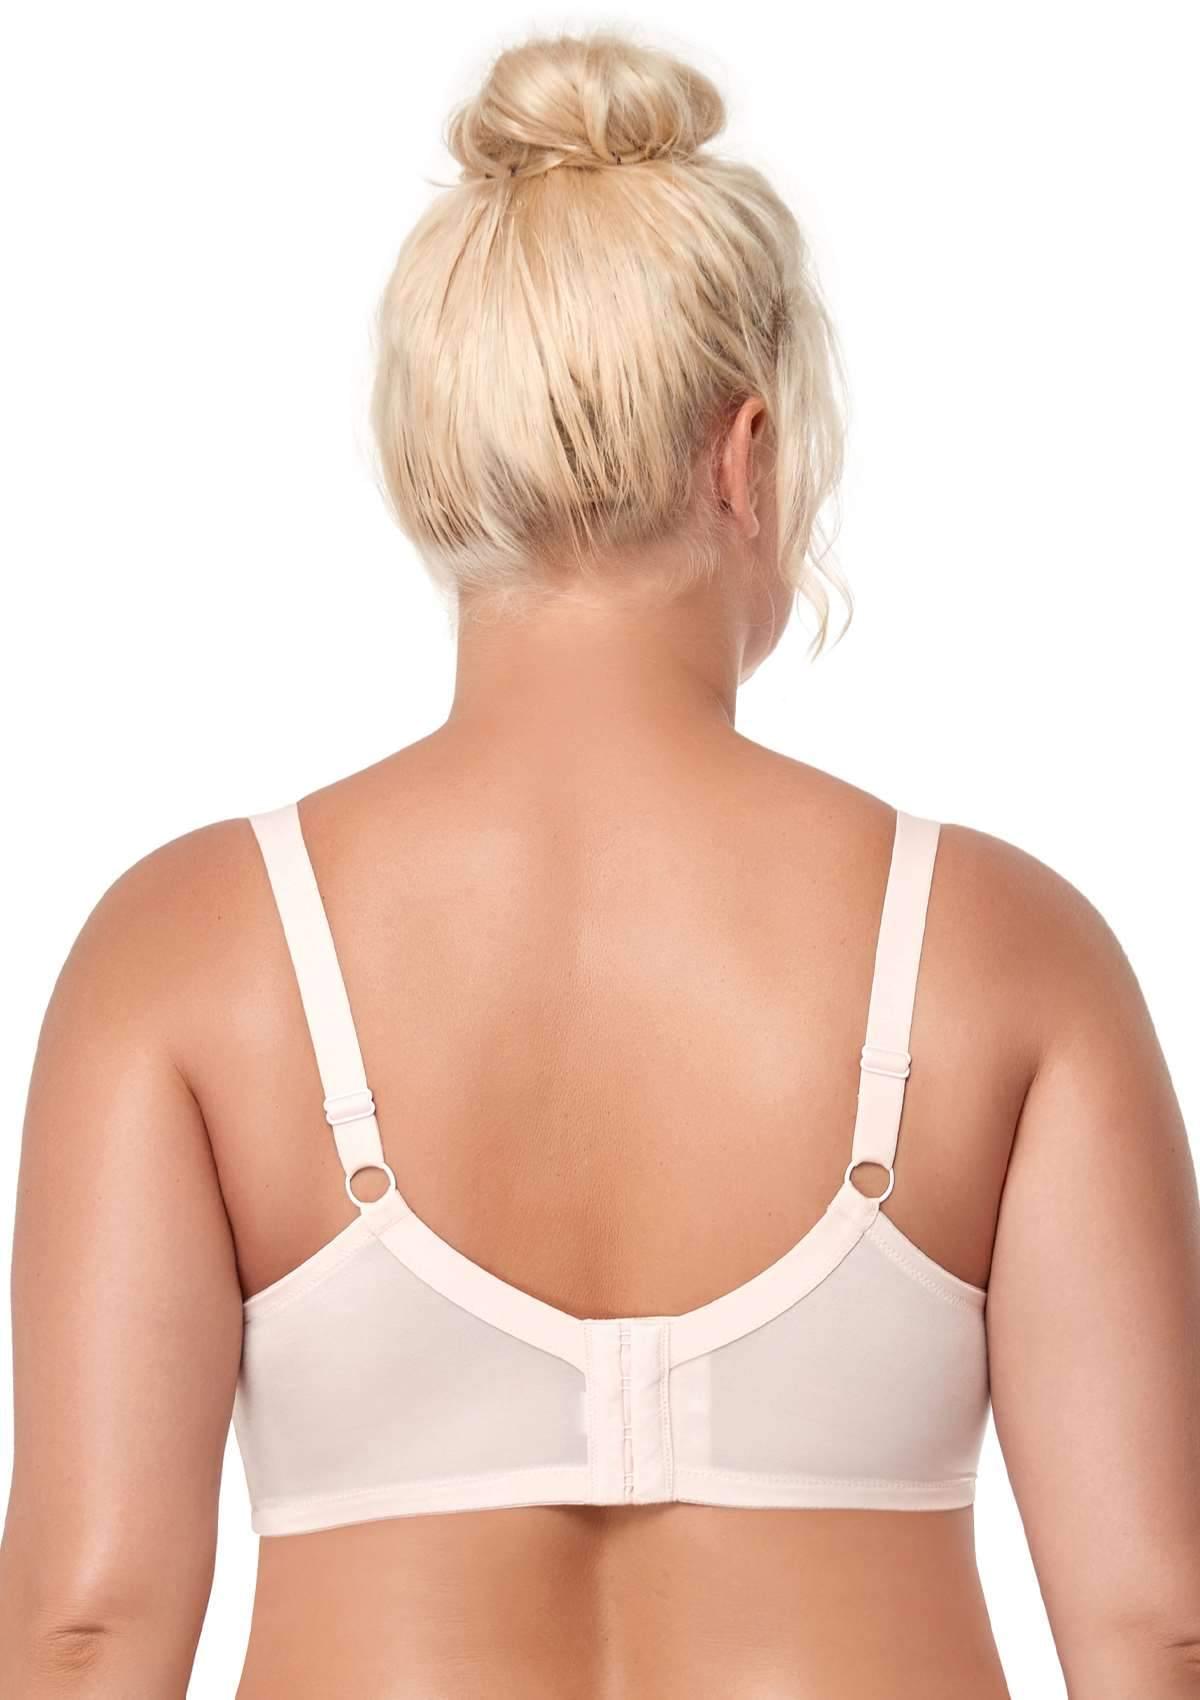 HSIA Blossom Matching Lacey Underwear And Bra Set: Sexy Lace Bra - Dusty Peach / 44 / DDD/F